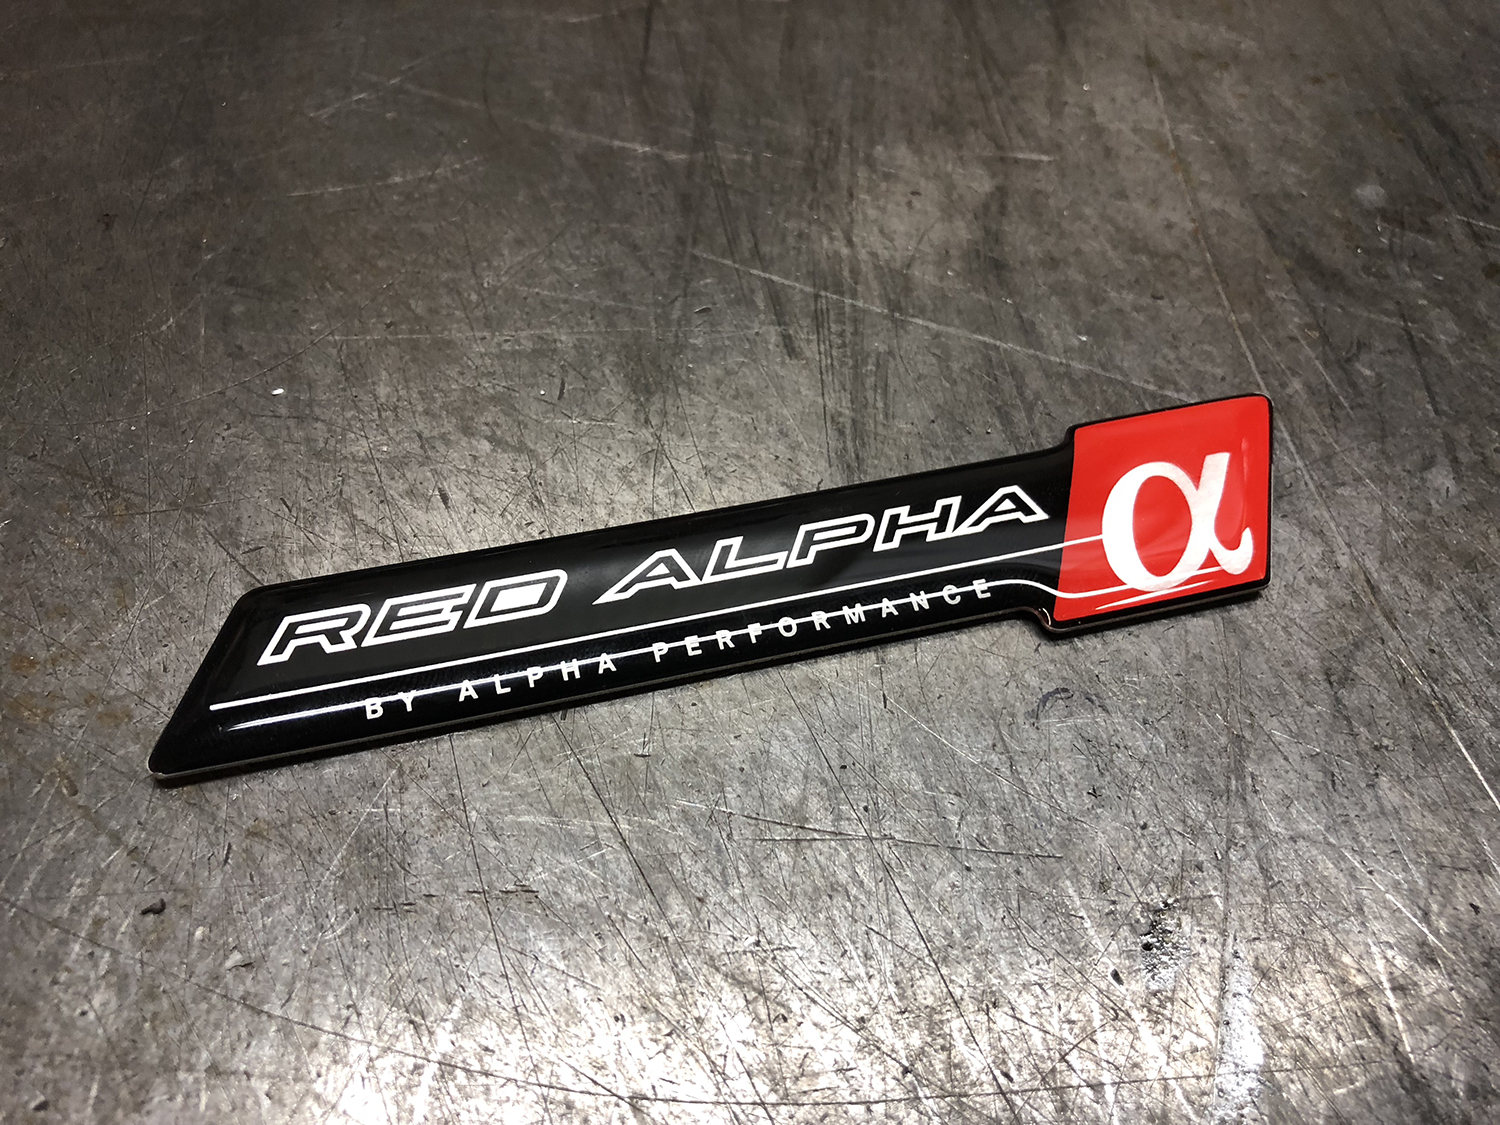 INFINITI Q60 Q50 Red Alpha Badge - AMS Performance